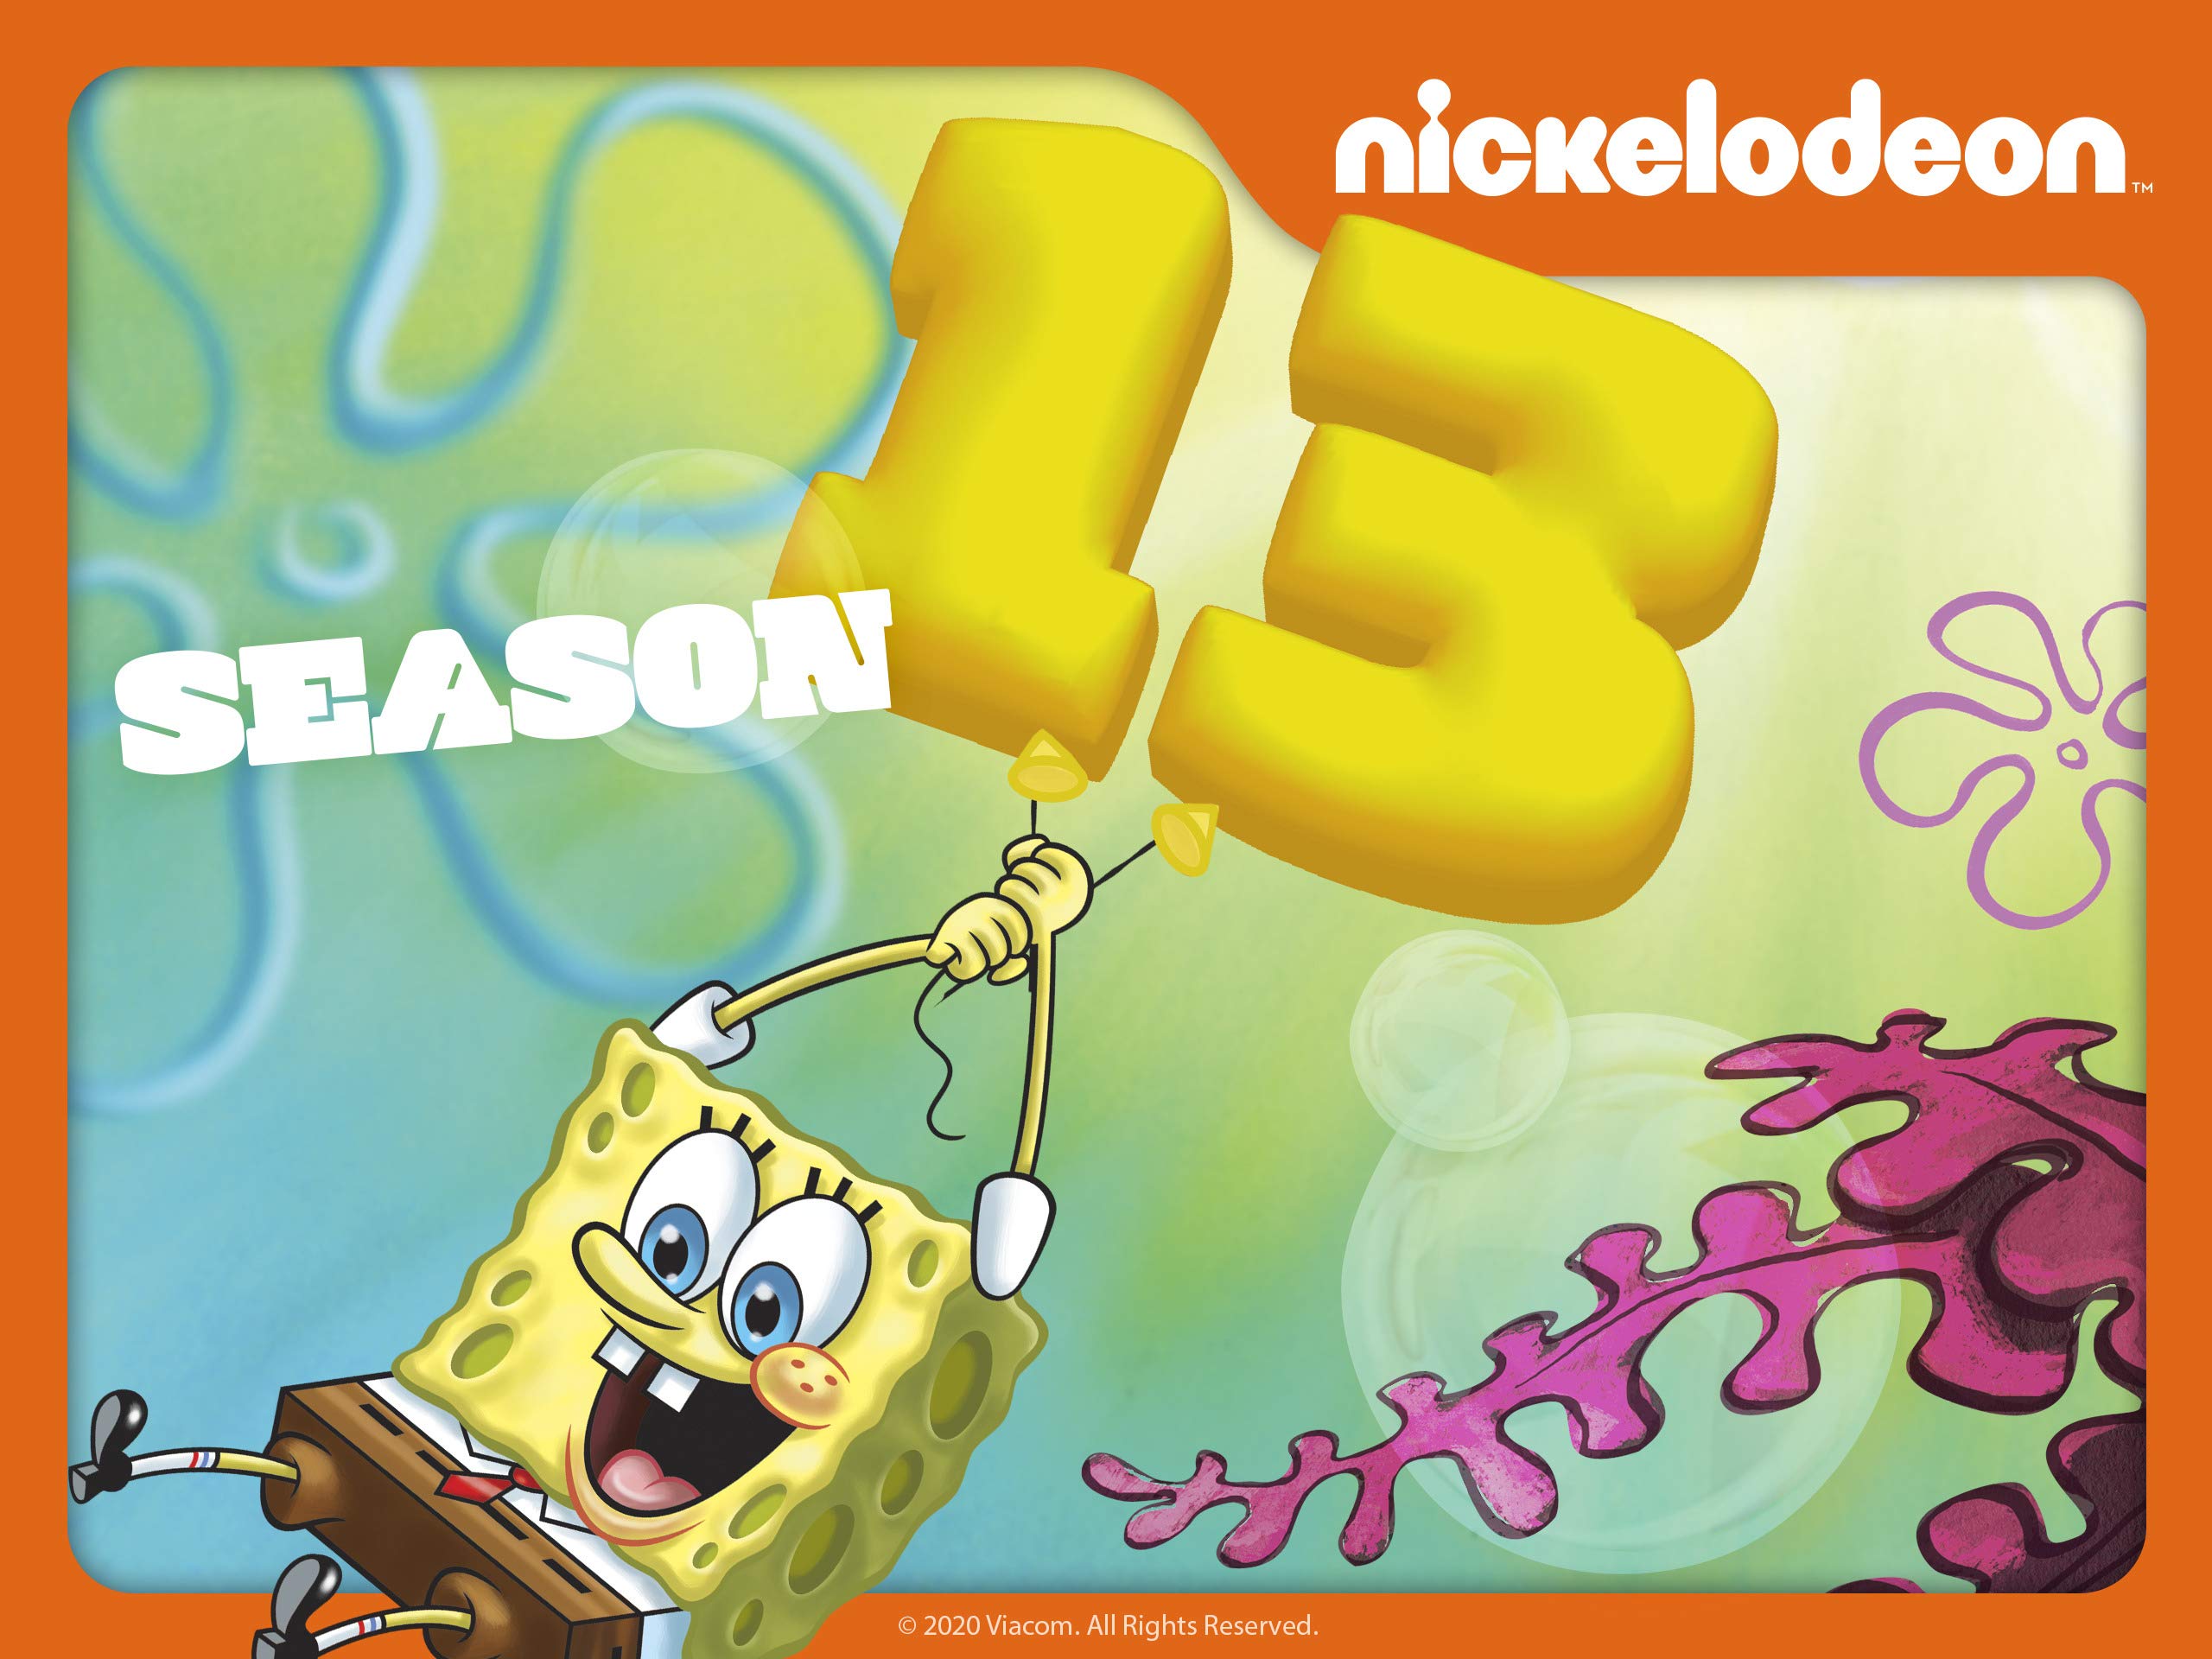 SpongeBob SquarePants (season 3) - Wikipedia